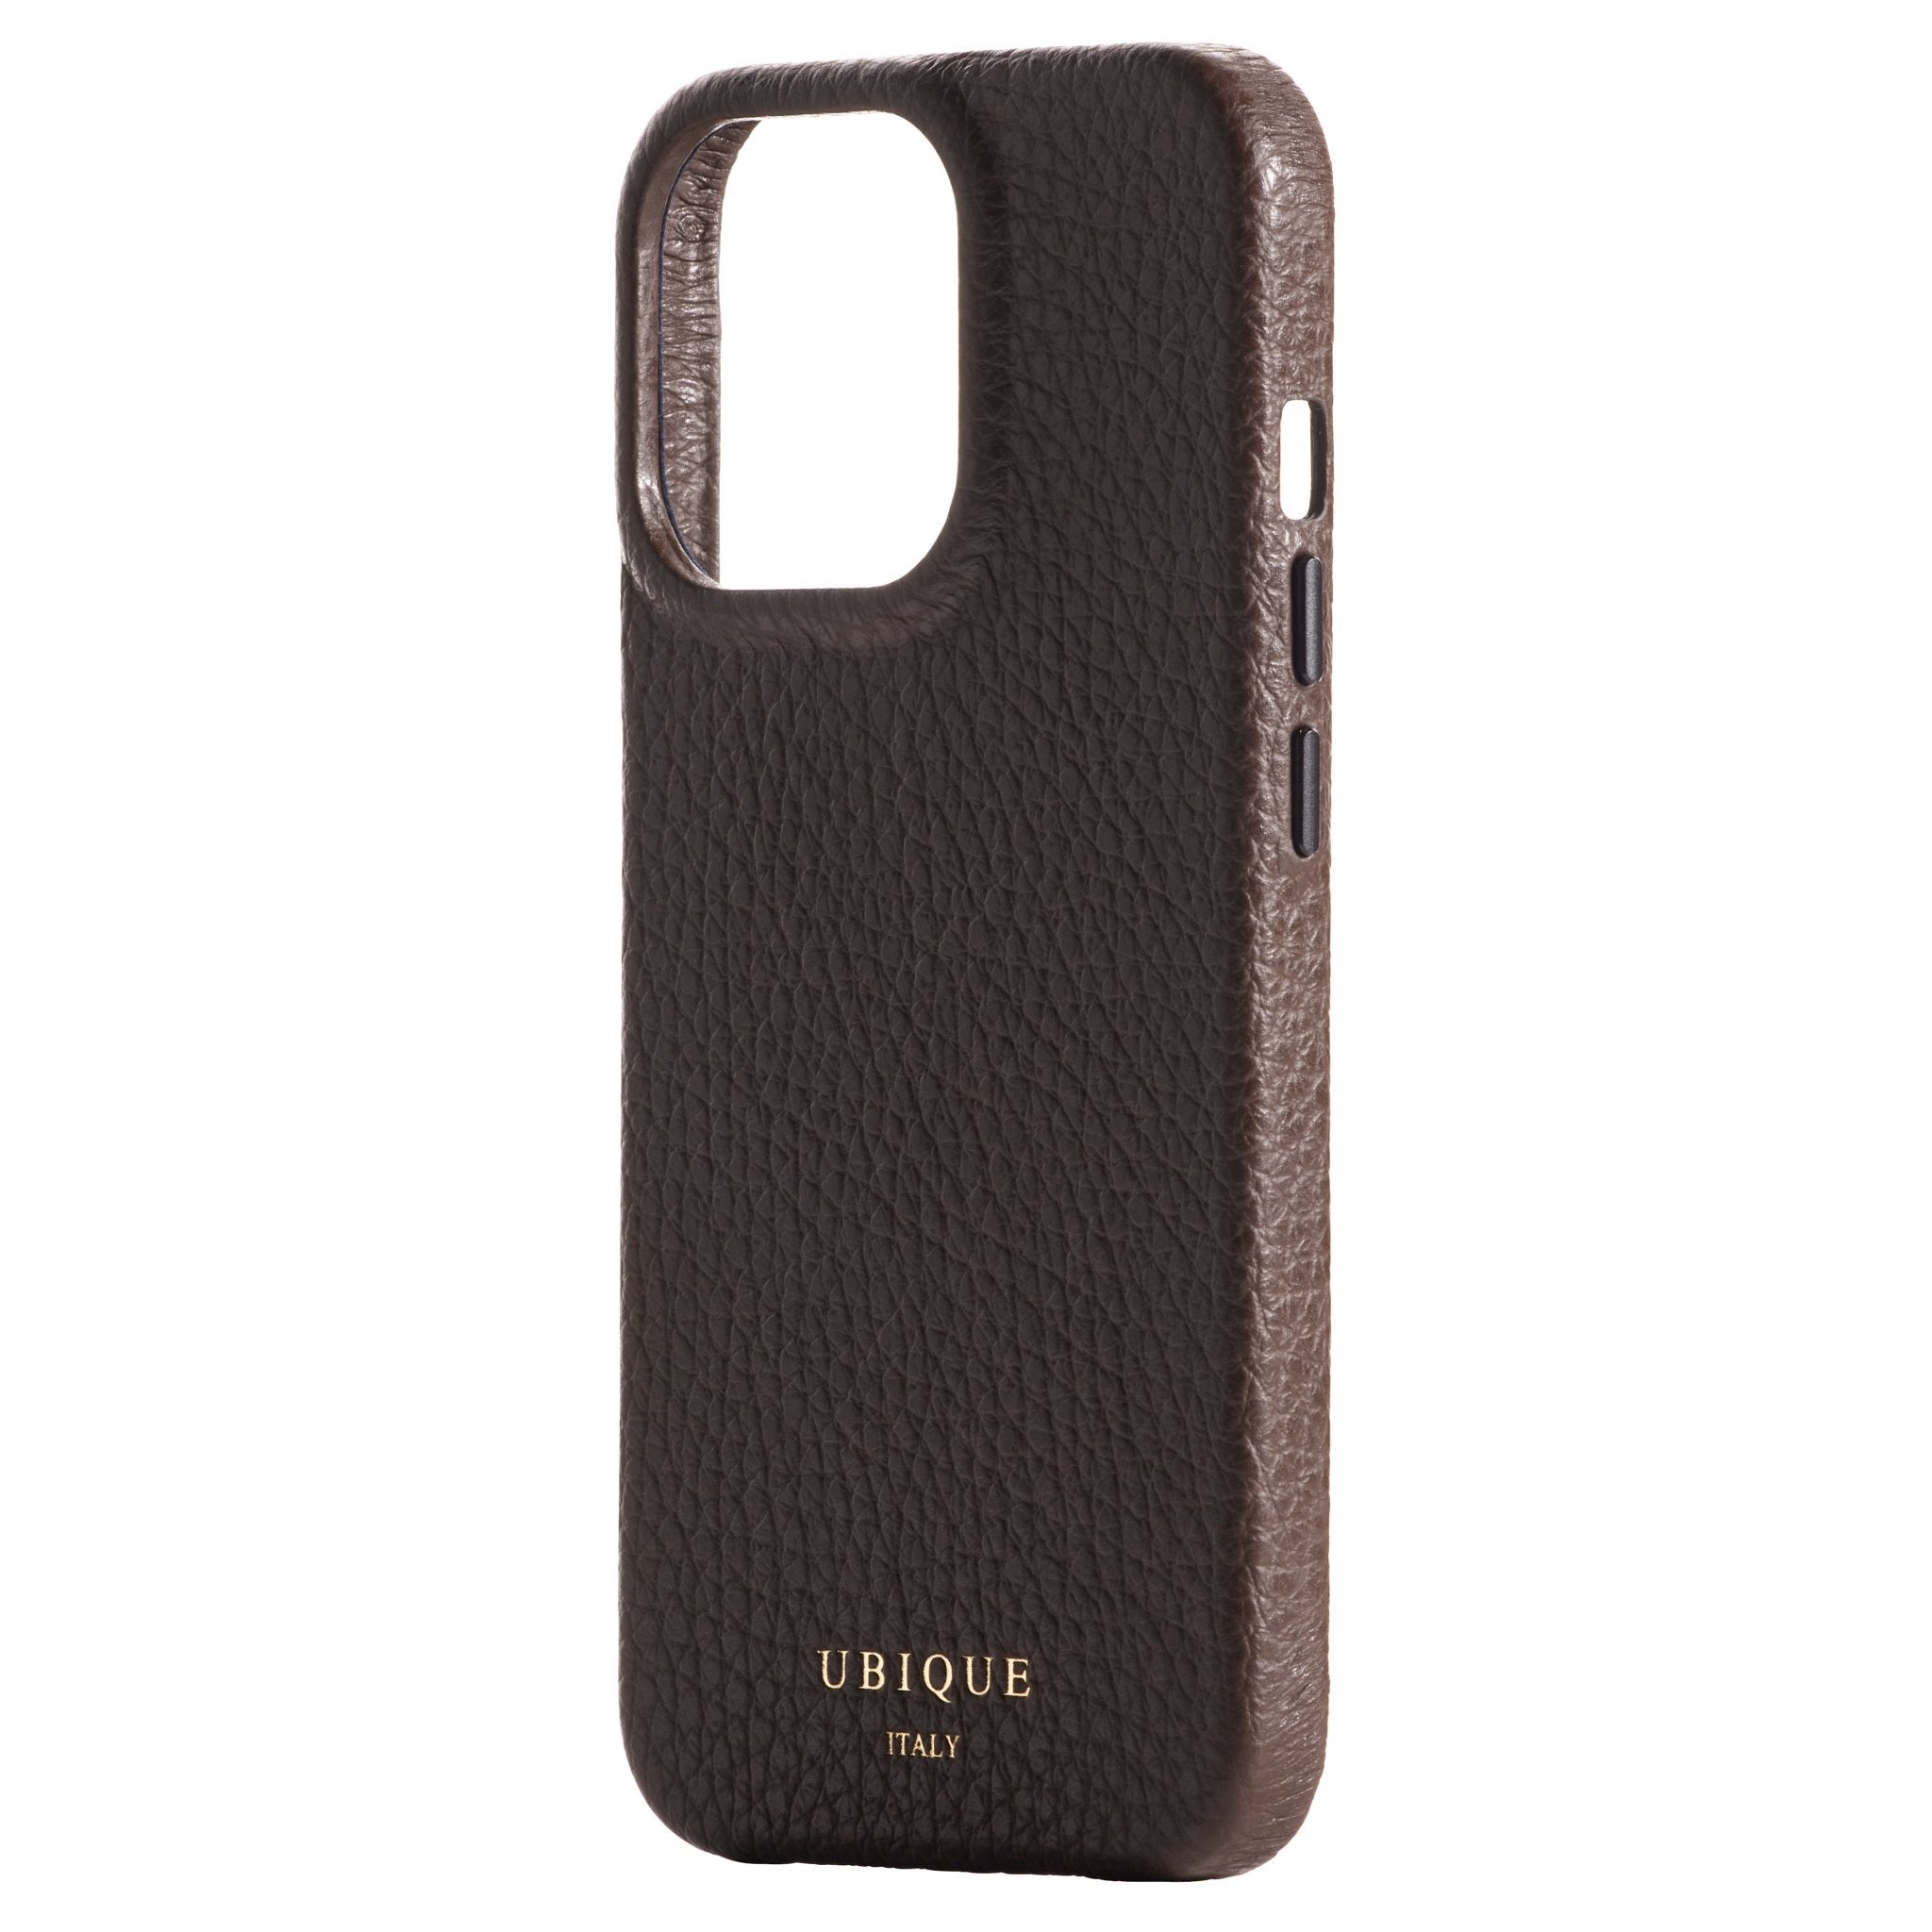 Ubique Italy Luxury iPhone Case 13 Pro Pebble Grain Leather Dark Walnut Angled